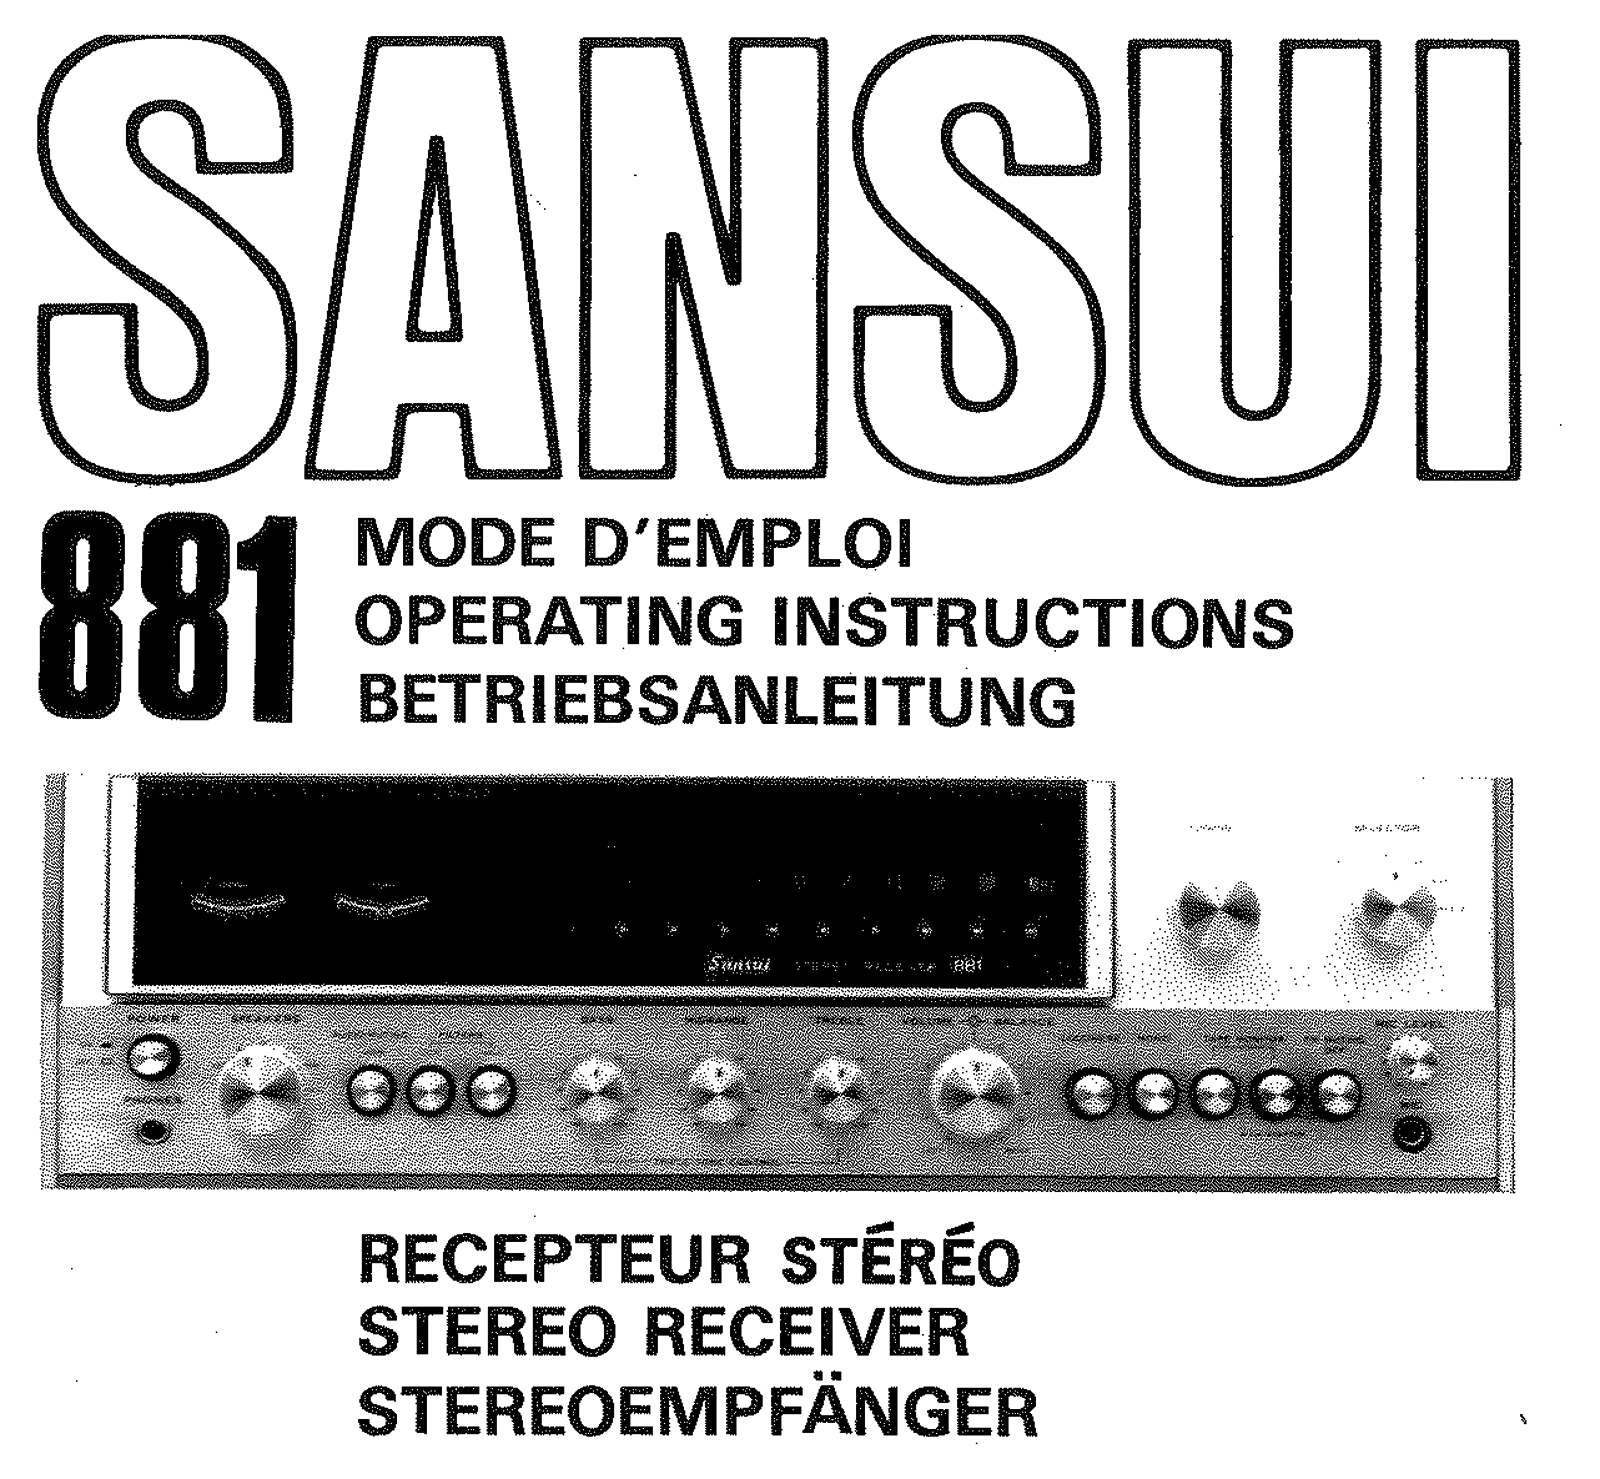 Sansui 881 Owners Manual